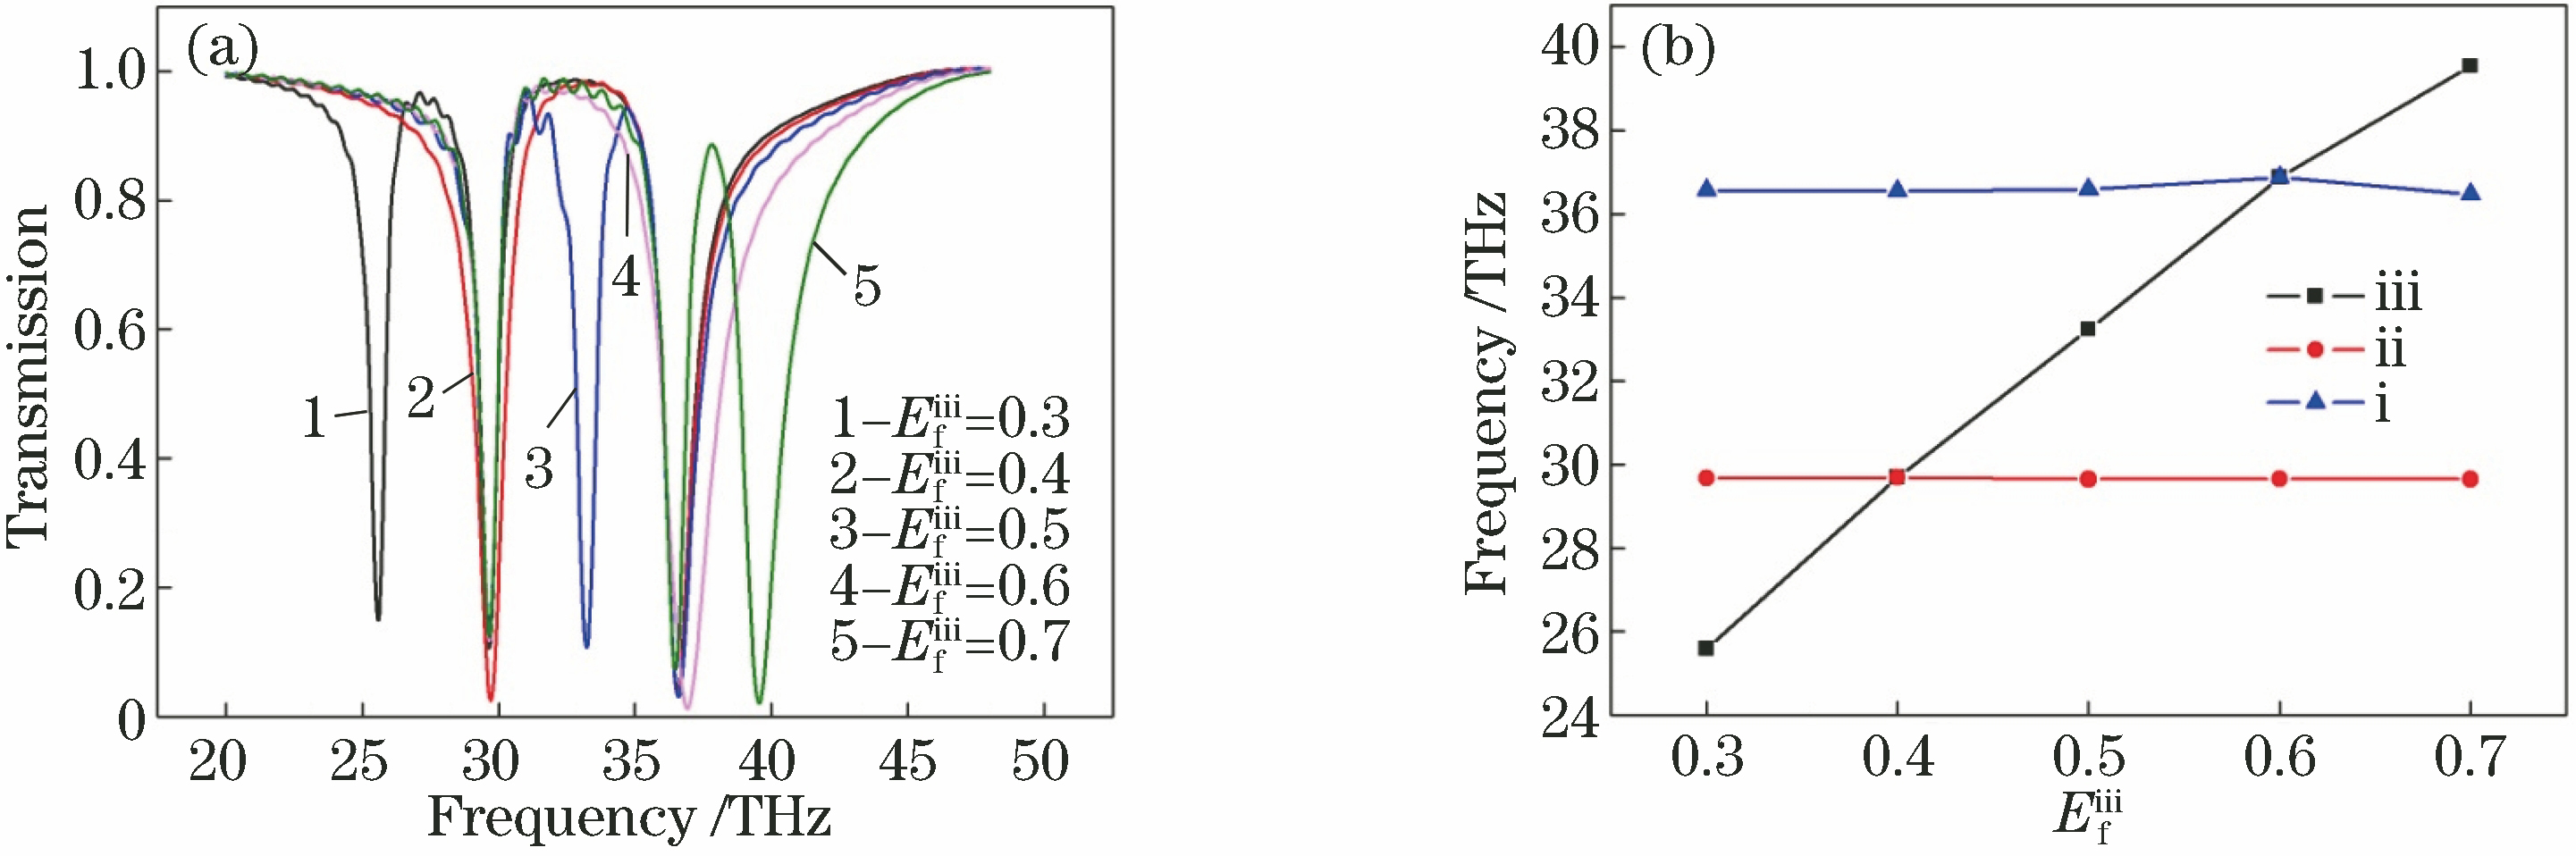 Effect of Fermi level Efiii on output spectrum. (a) Output spectra of composite structure under different Fermi levels Efiii; (b) filter frequency versus Fermi level Efiii